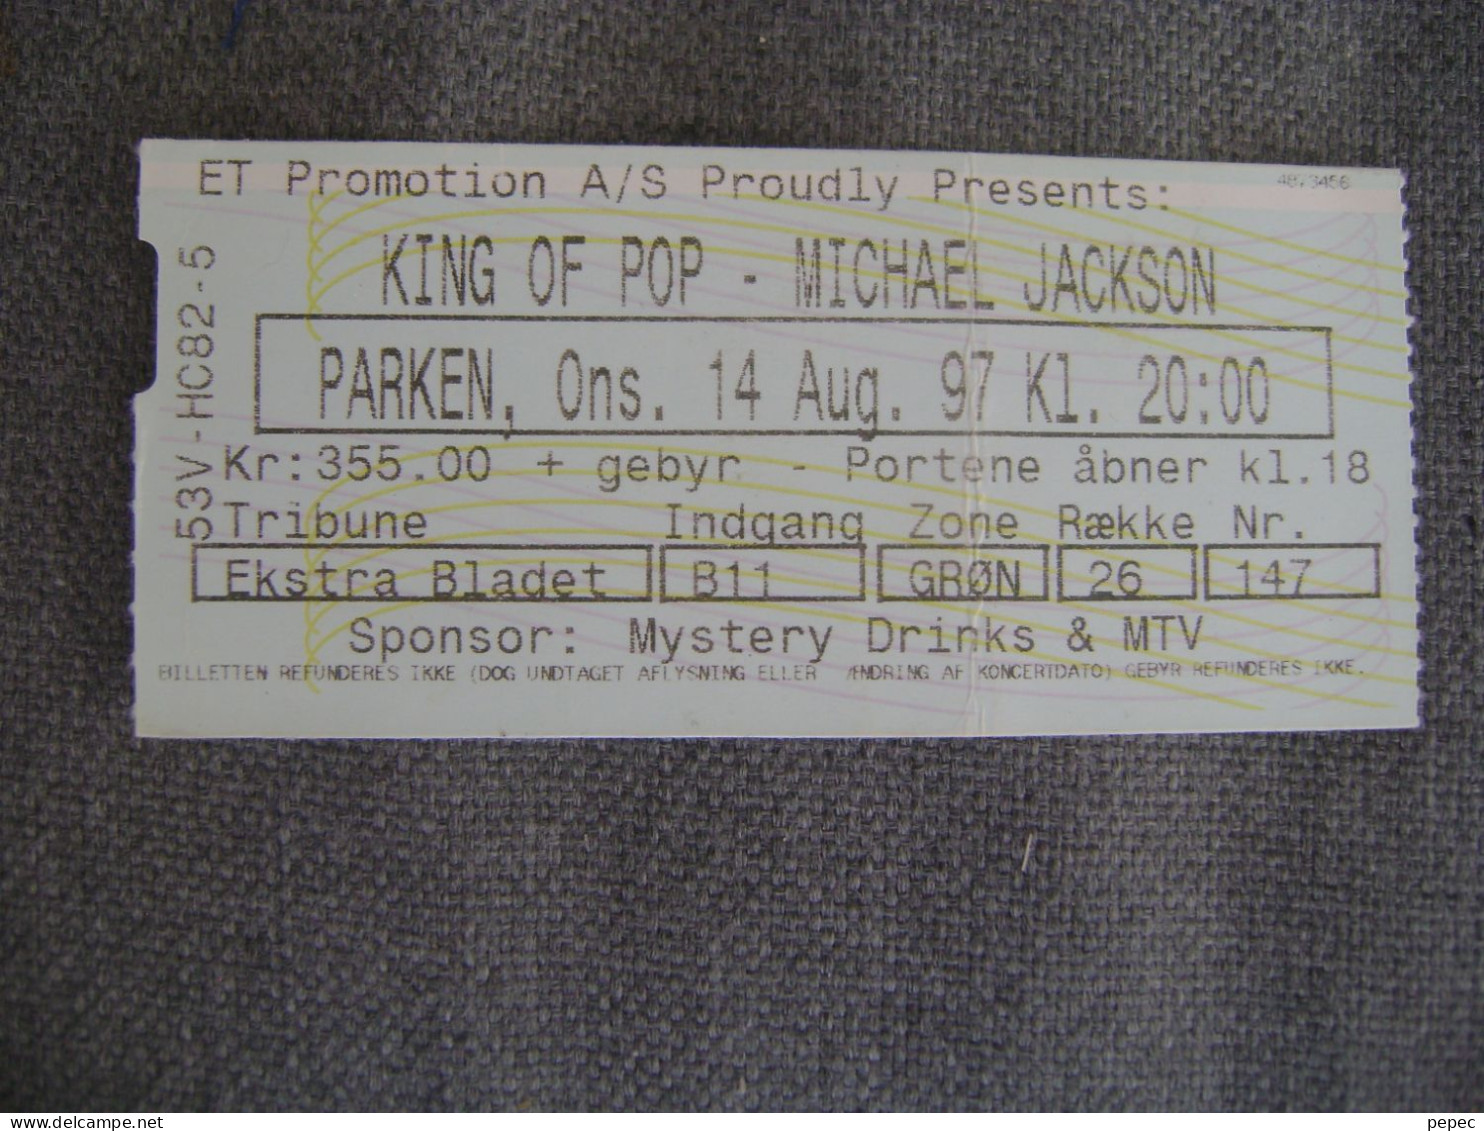 MICHAEL JACKSON  PARKEN - KOPENHAGEN  14/08/1997 - Konzertkarten